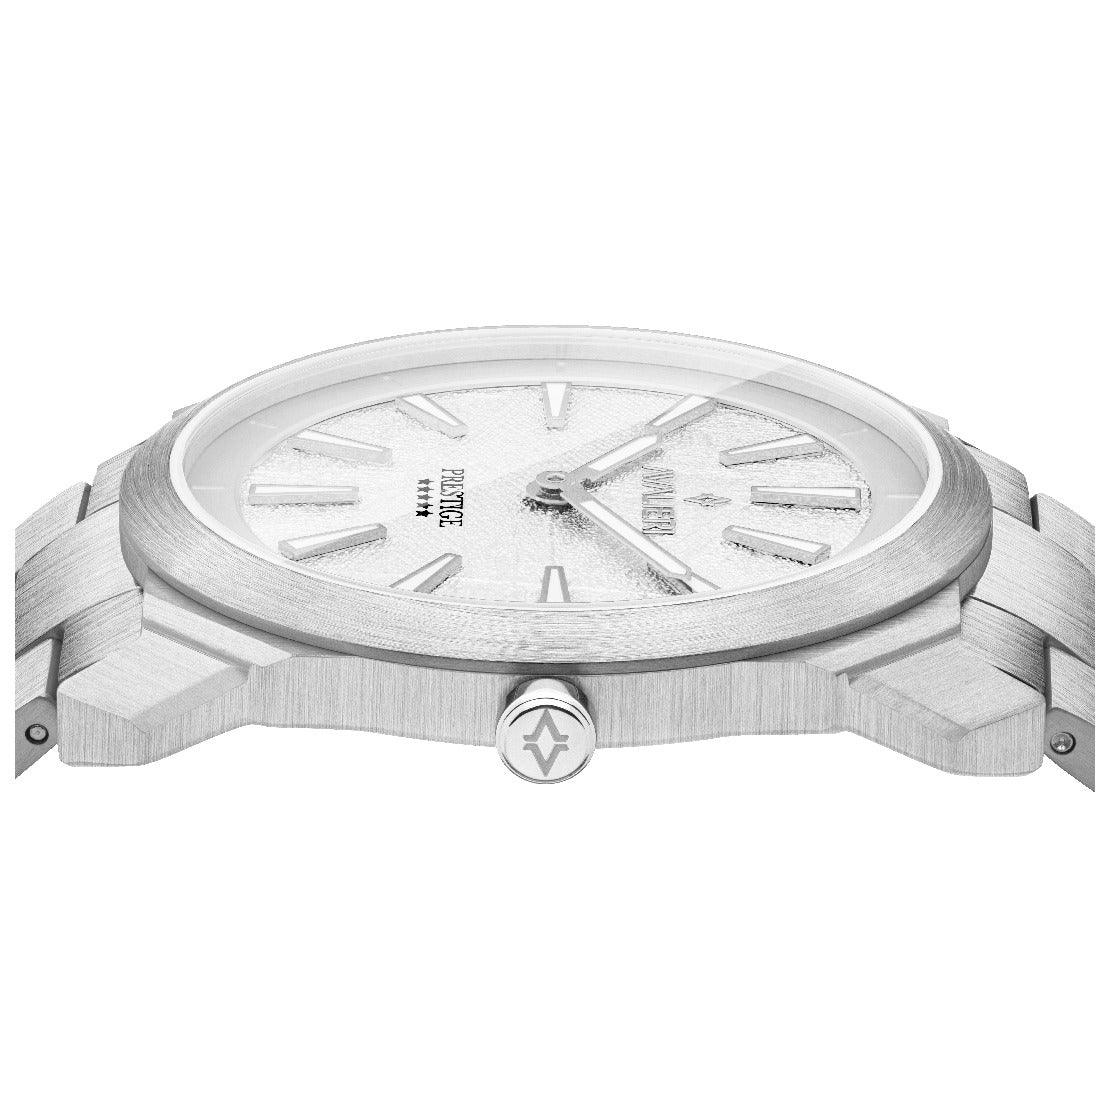 Avalieri Prestige Men's Watch, Swiss Quartz Movement, Silver White Dial - AP-0104